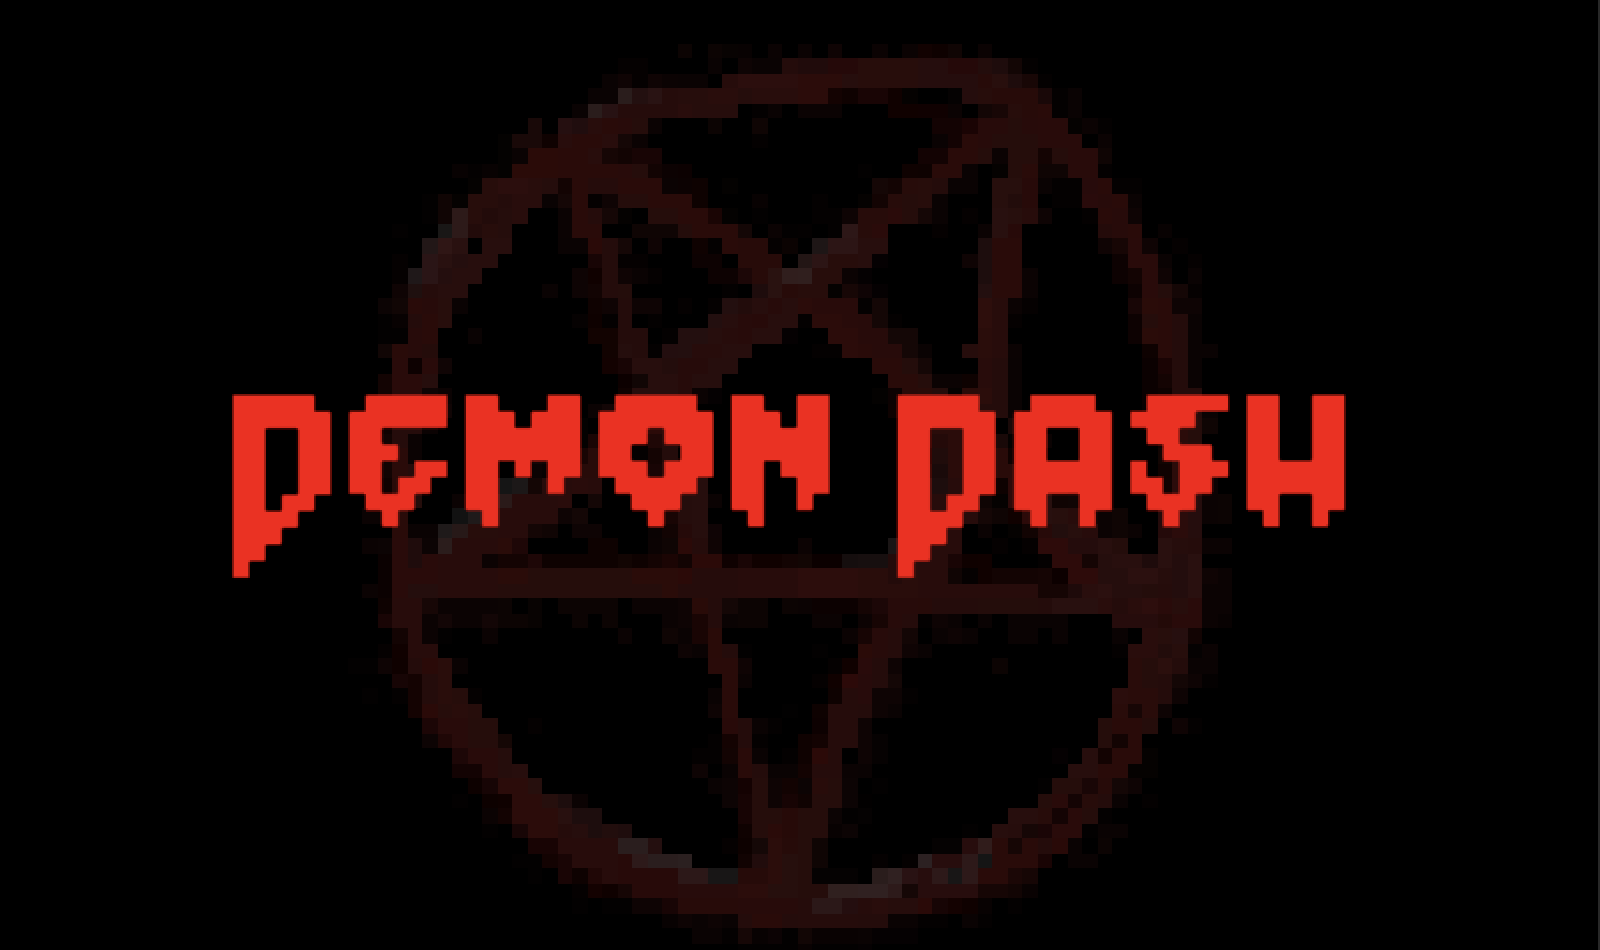 Demon Dash